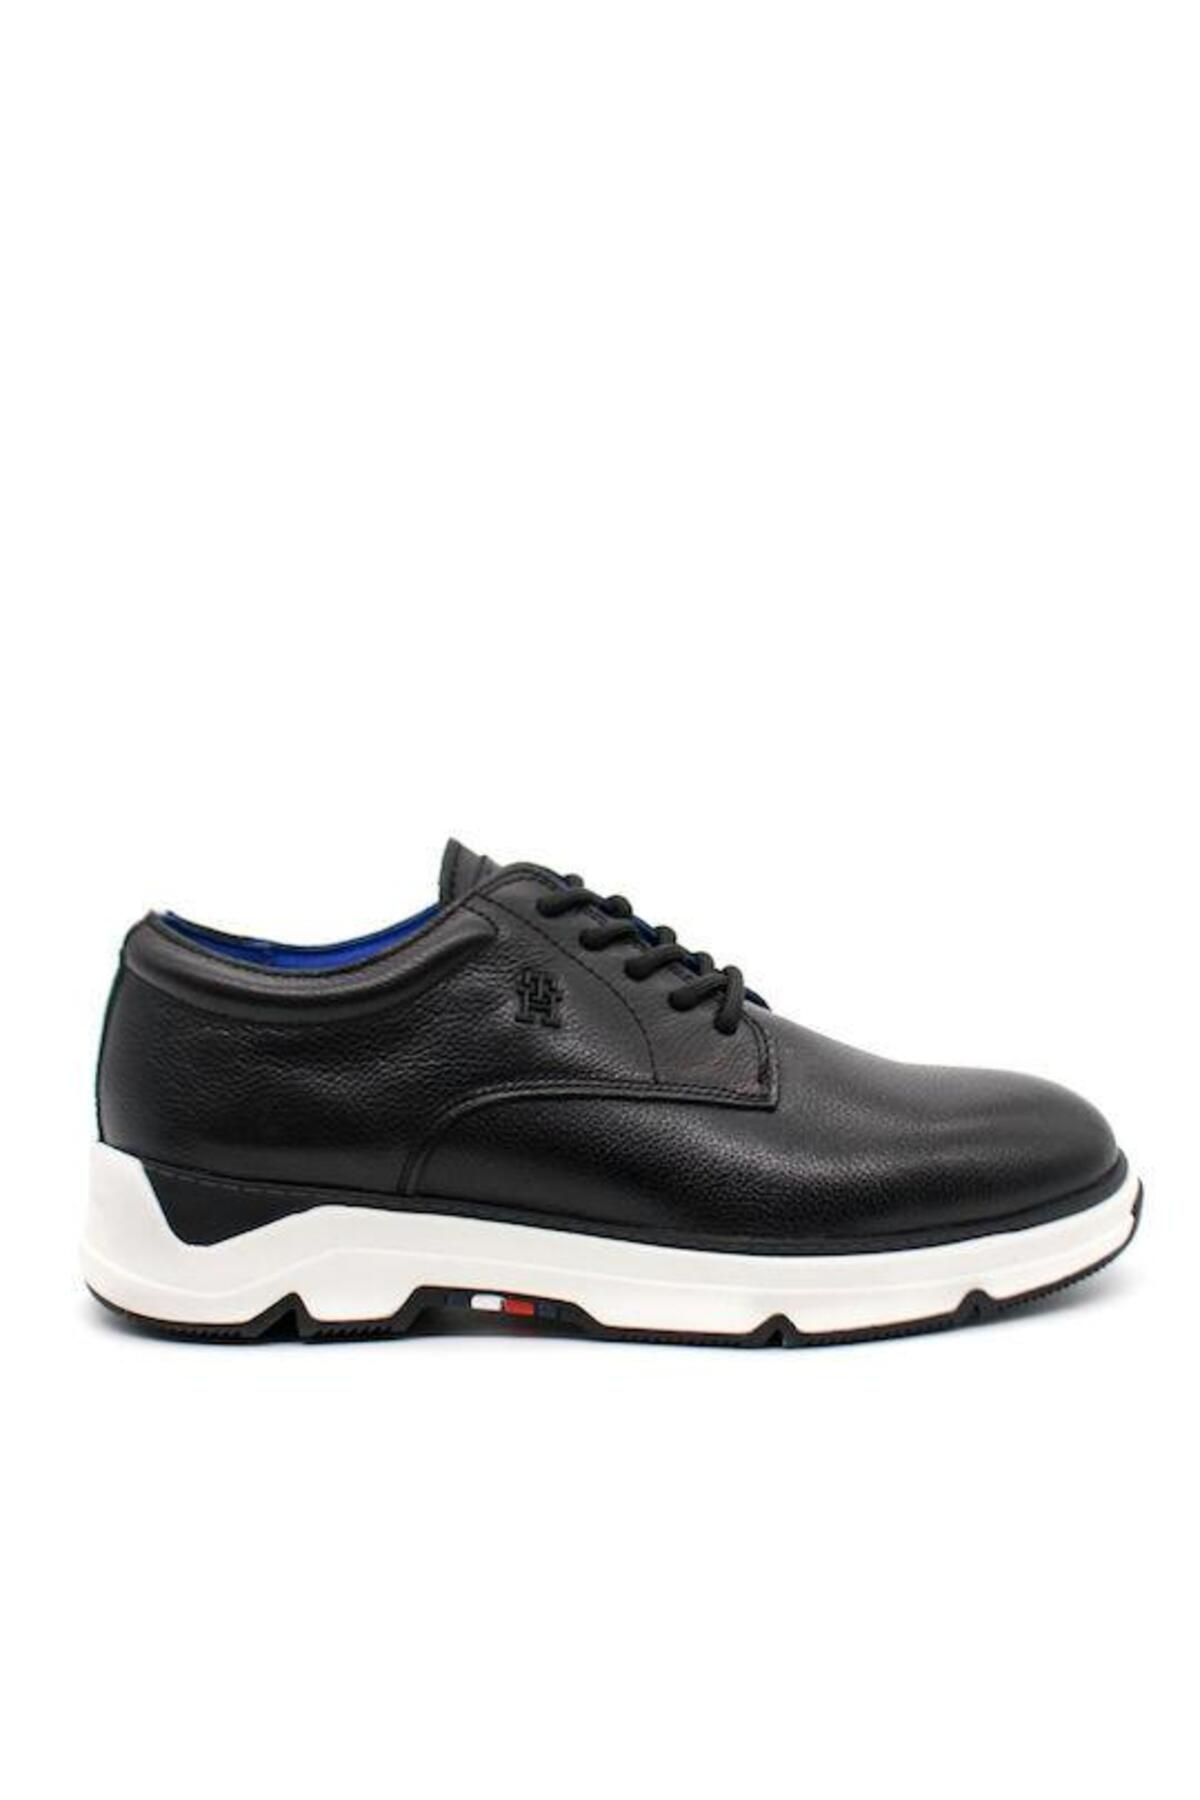 Tommy Hilfiger Premium Th Leather Hybrid Shoe